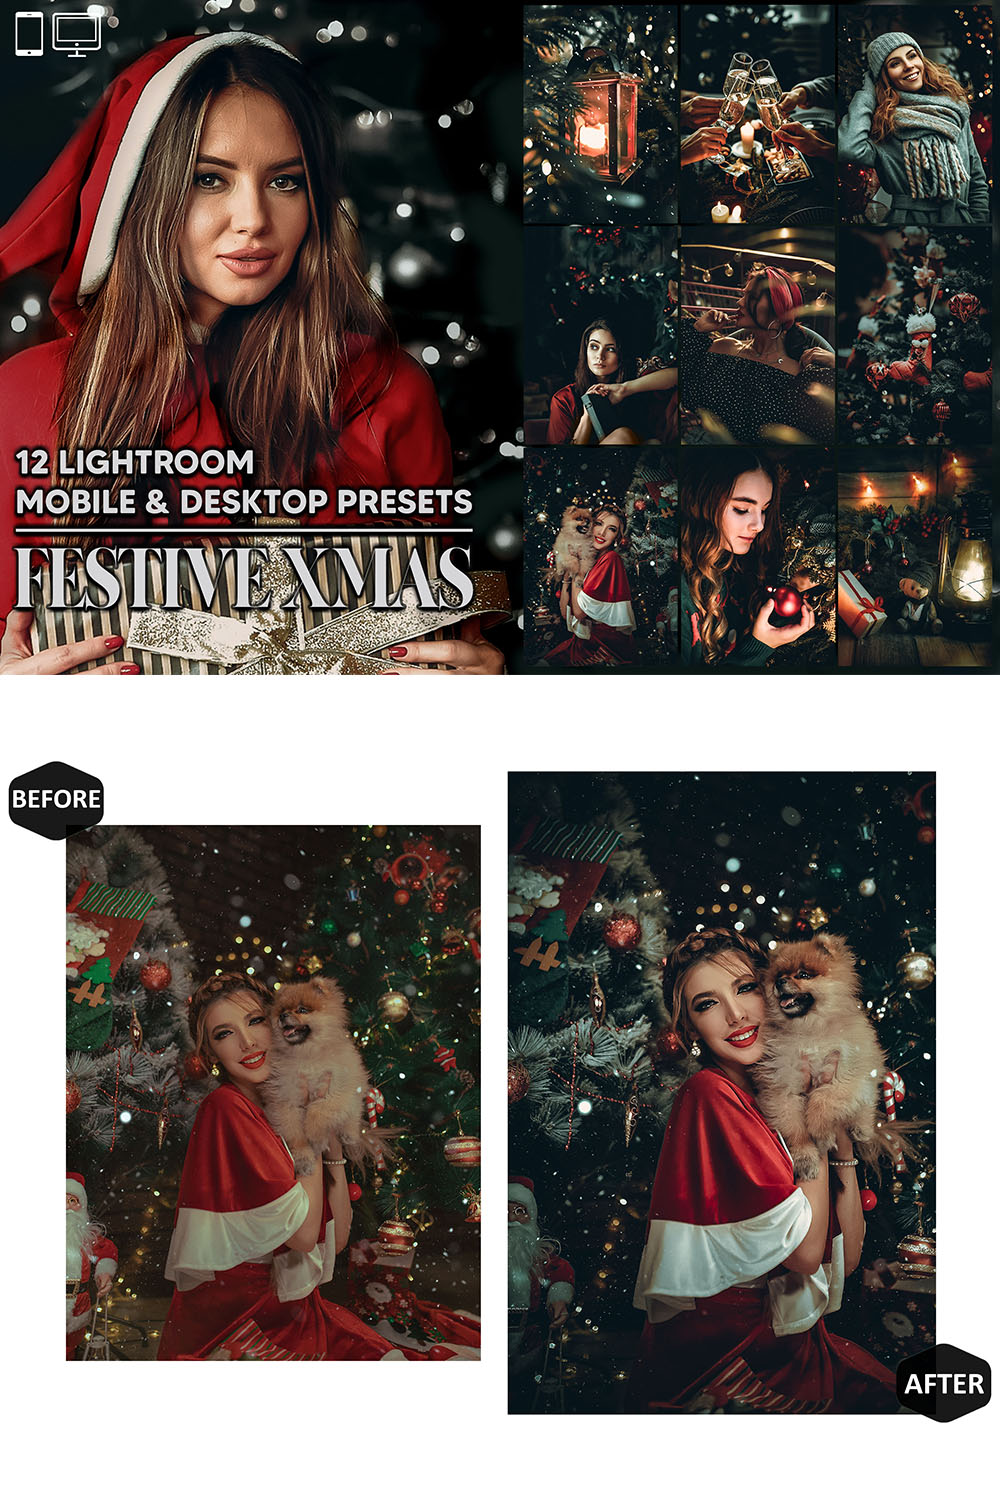 12 Festive Xmas Lightroom Presets, Christmas Mobile Preset, Moody Holiday Desktop LR Filter Scheme Lifestyle Theme For Portrait, Instagram pinterest preview image.